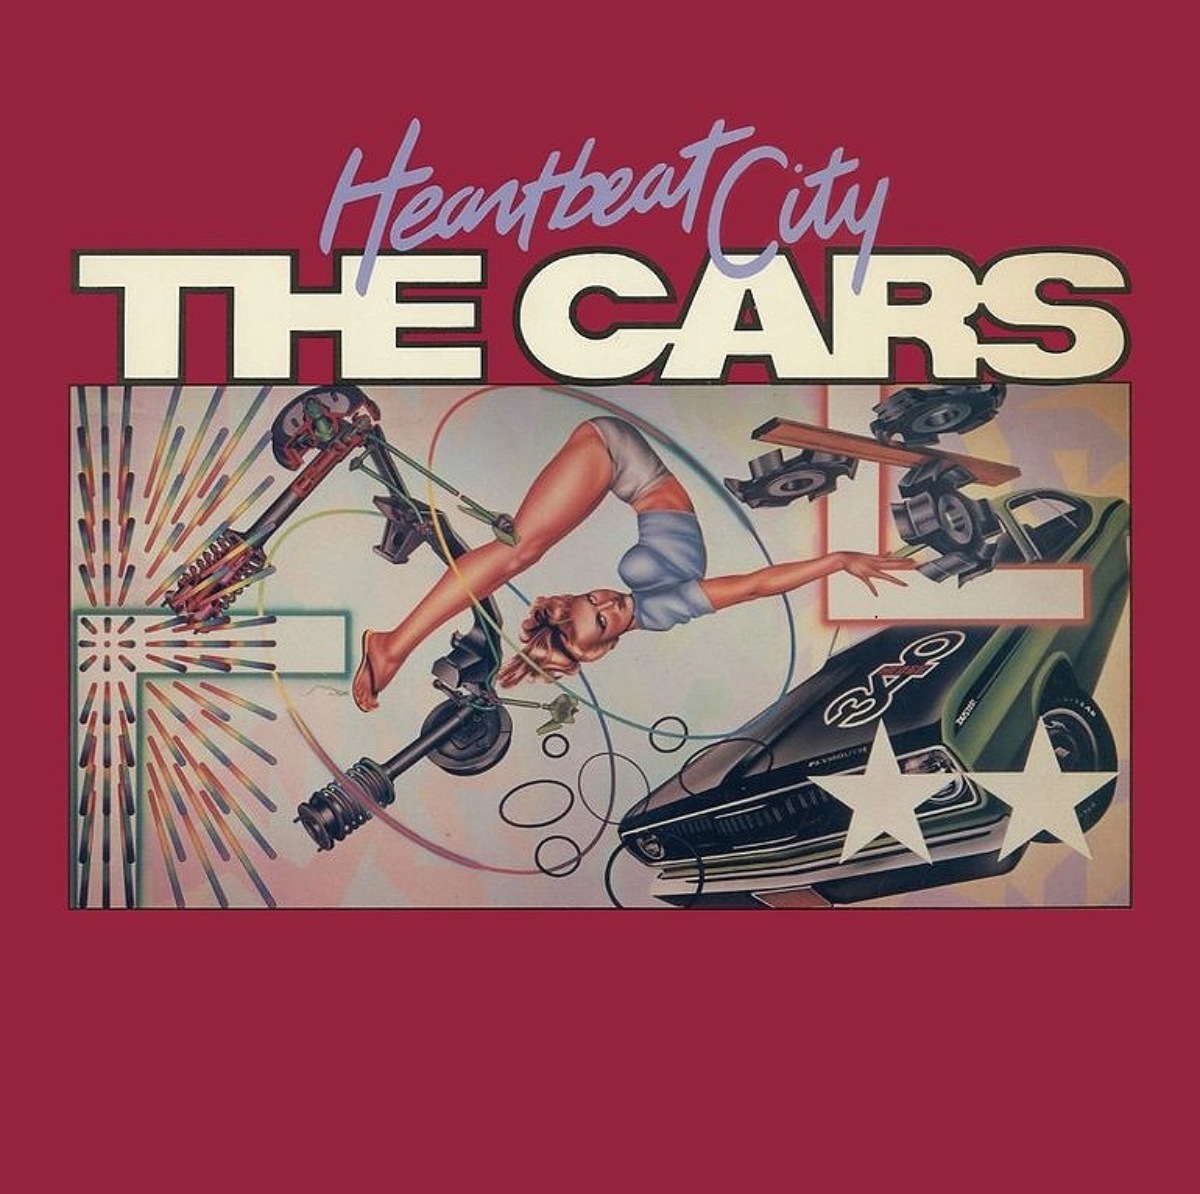 A arte da capa de "Heartbeat City" de The Cars